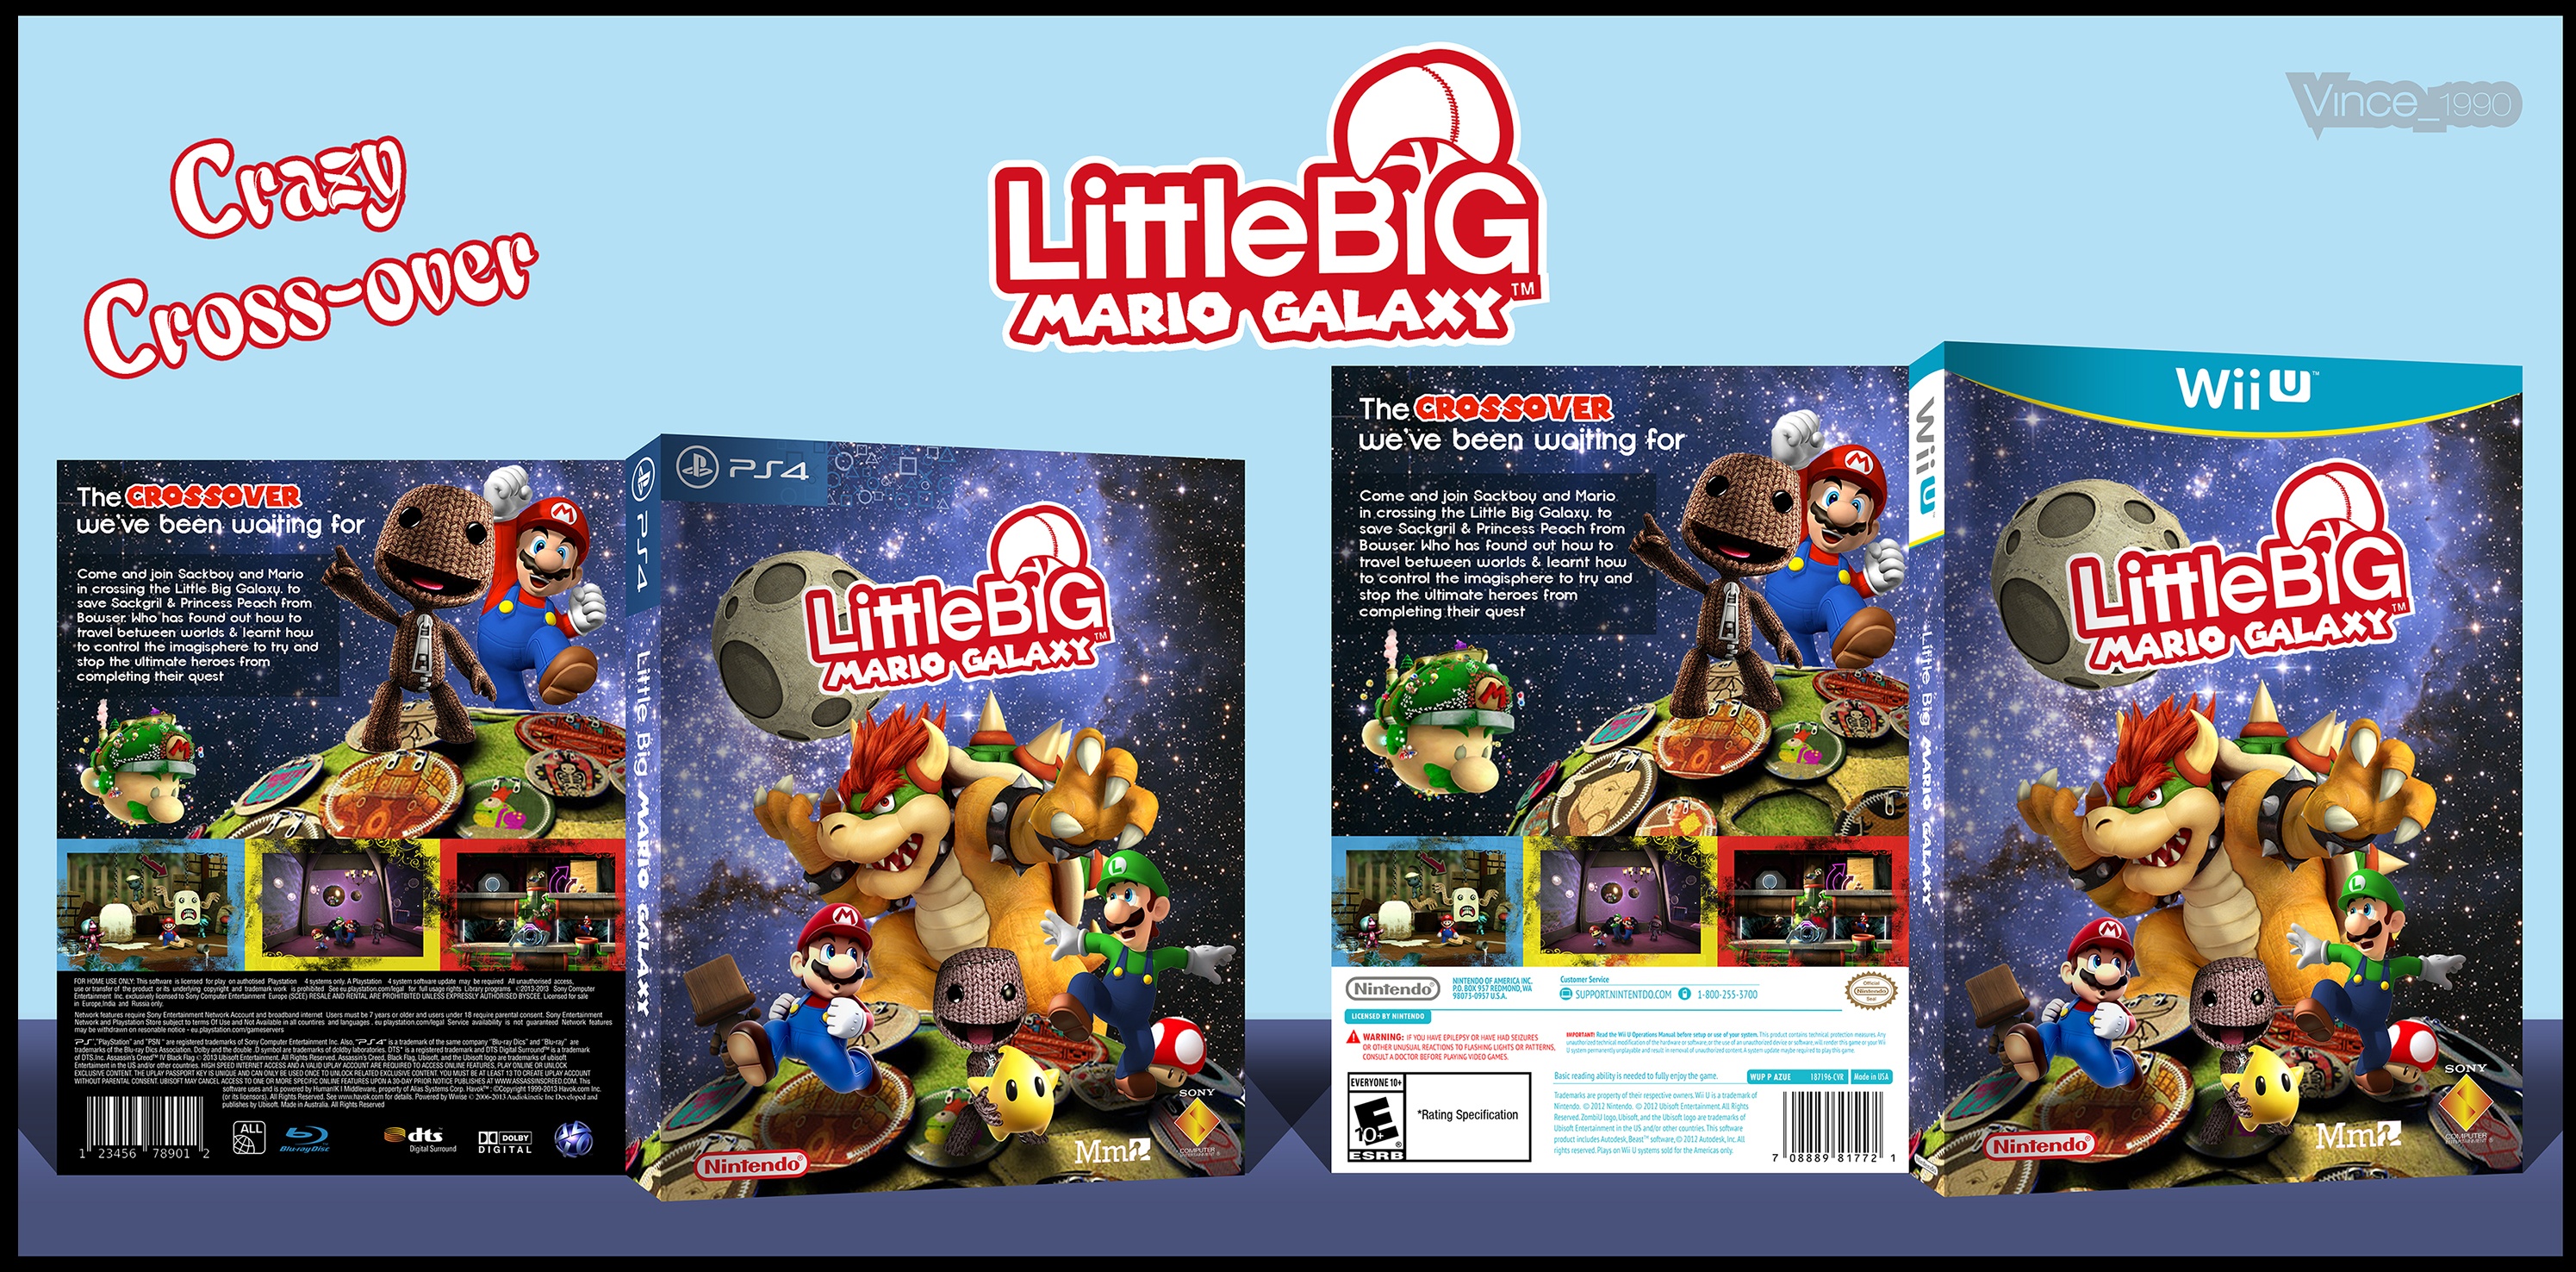 Little Big Mario Galaxy box cover